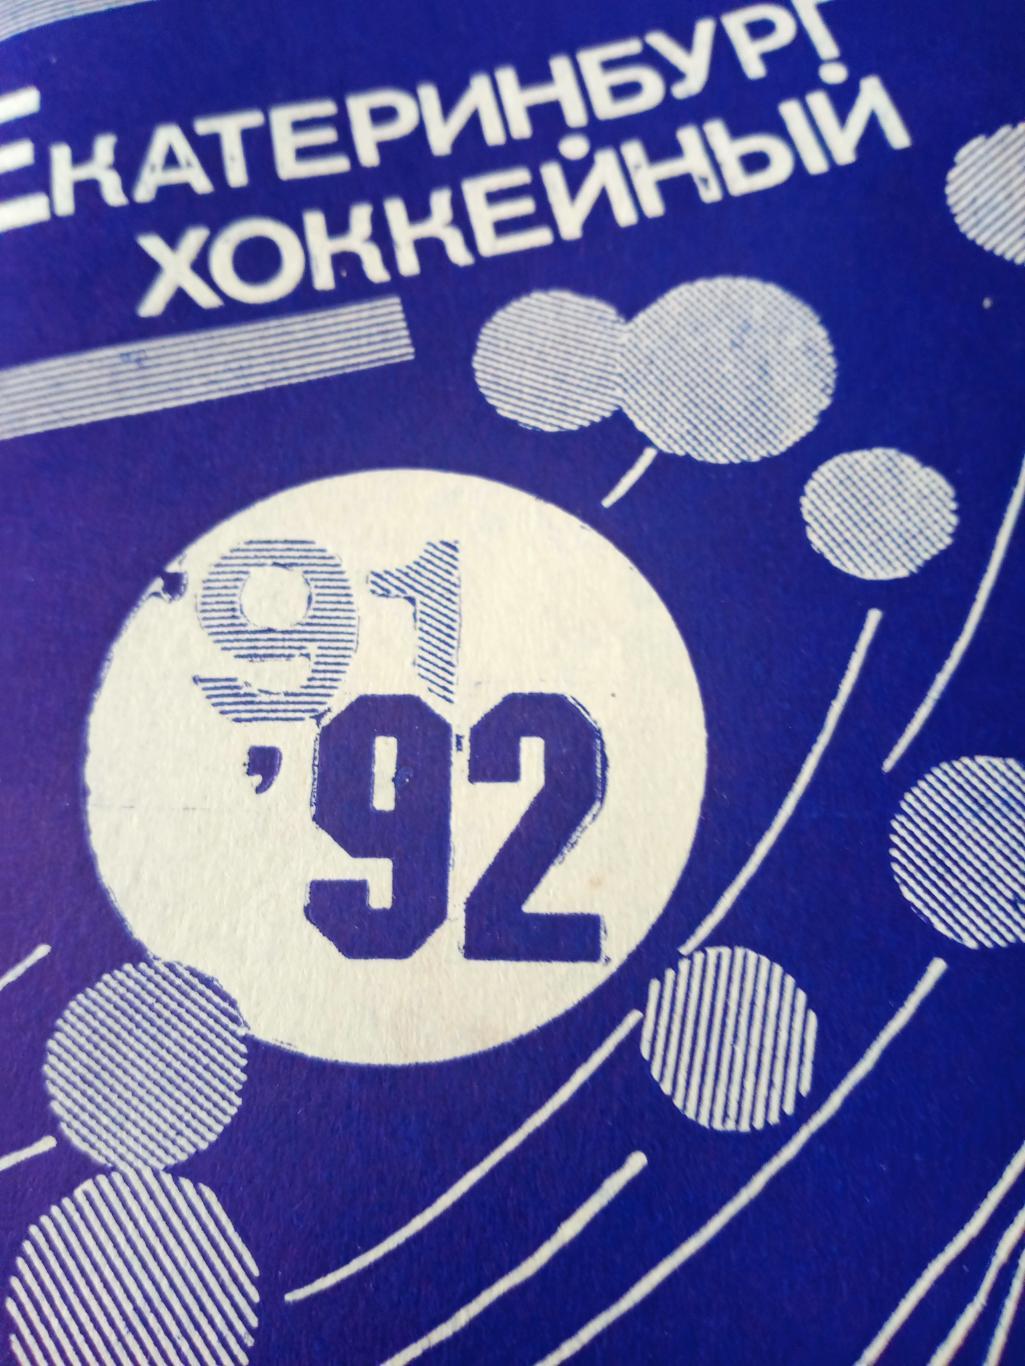 Екатеринбург хоккейный. 1991/1992 гг.